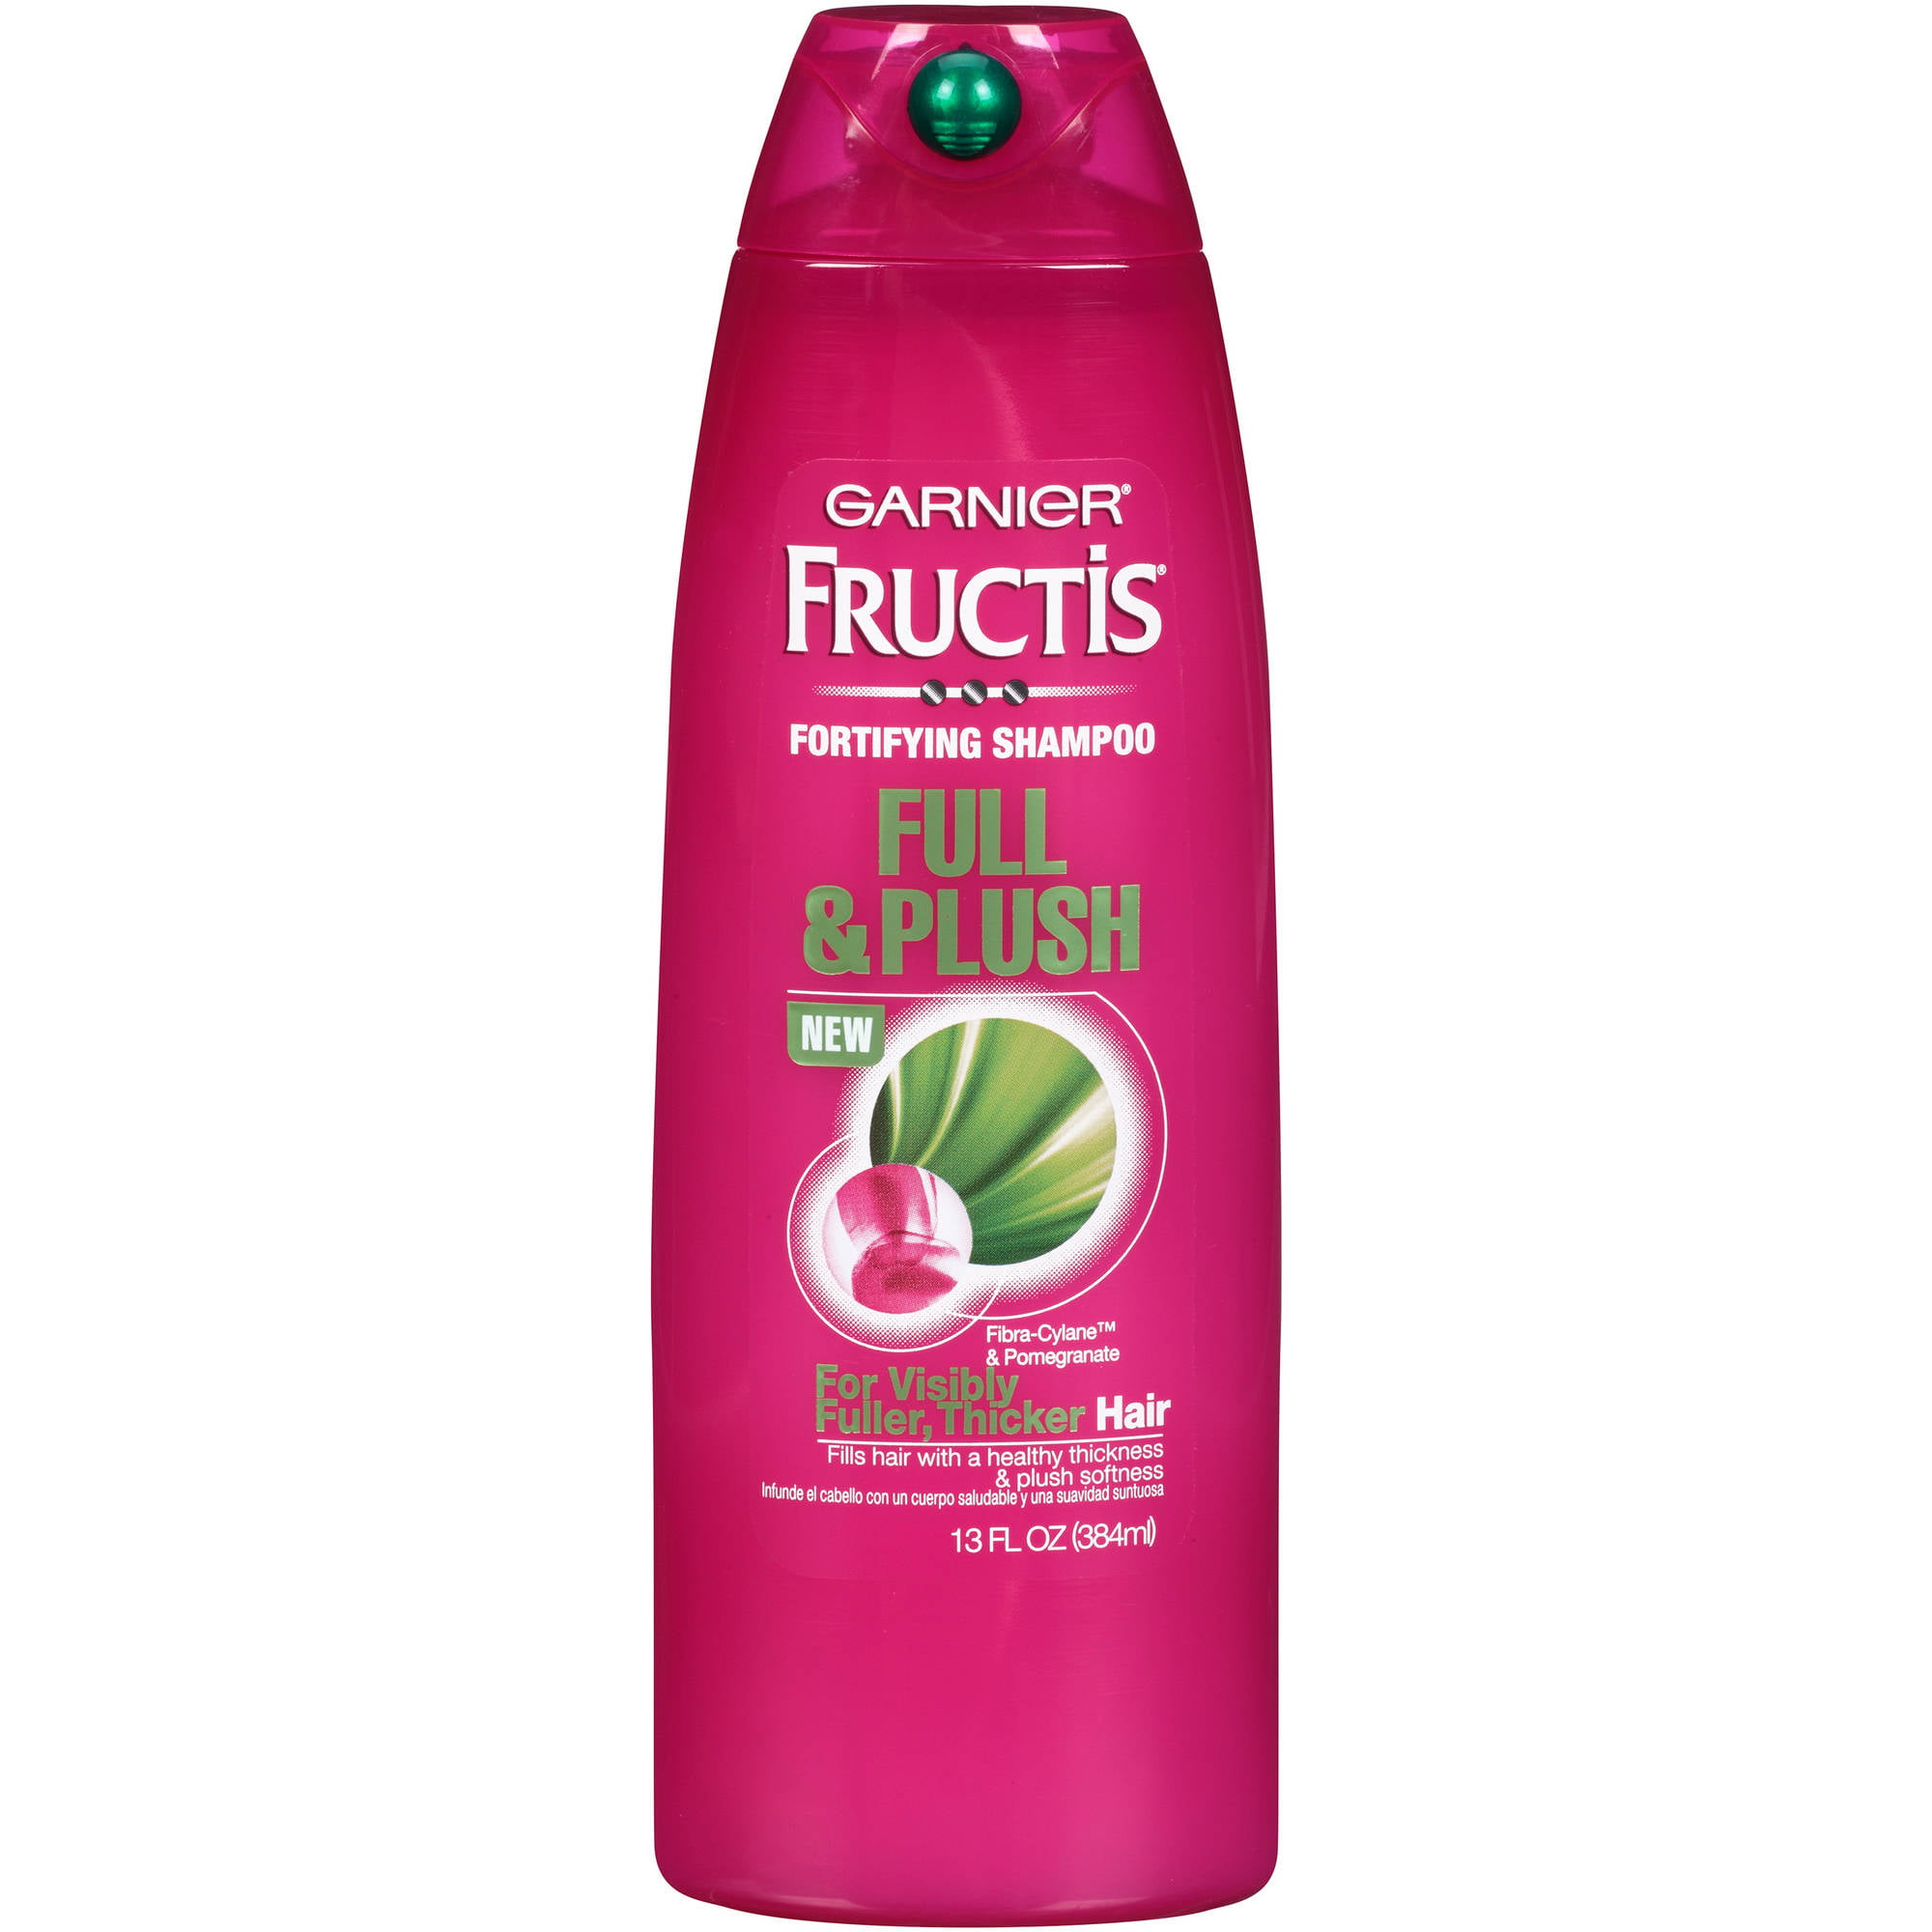 Garnier Fructis Full & Plush - Walmart.com